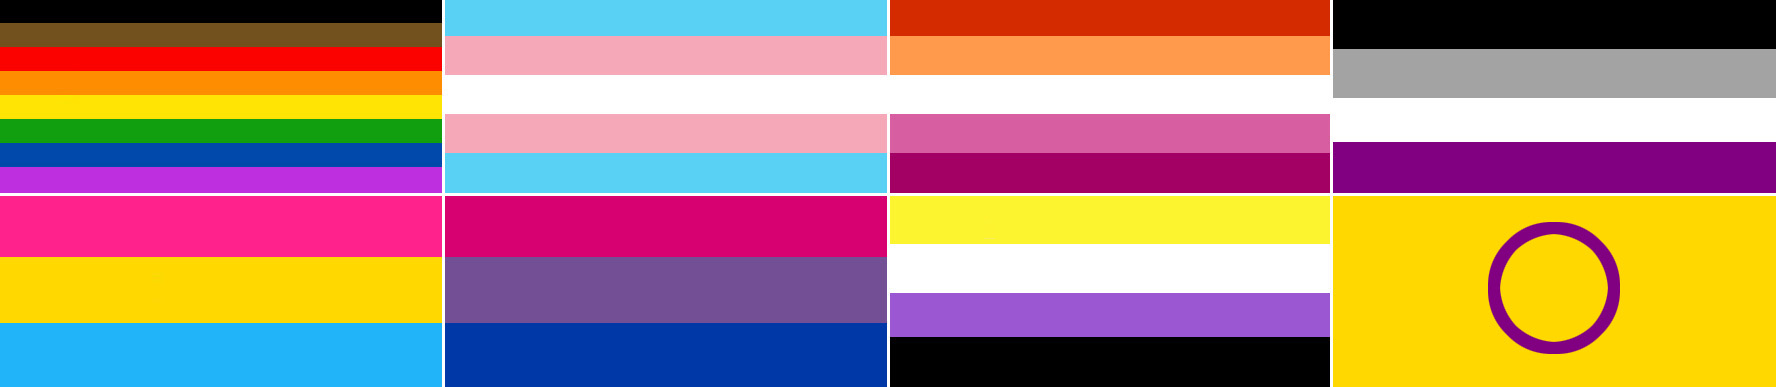 LGBT+ flags